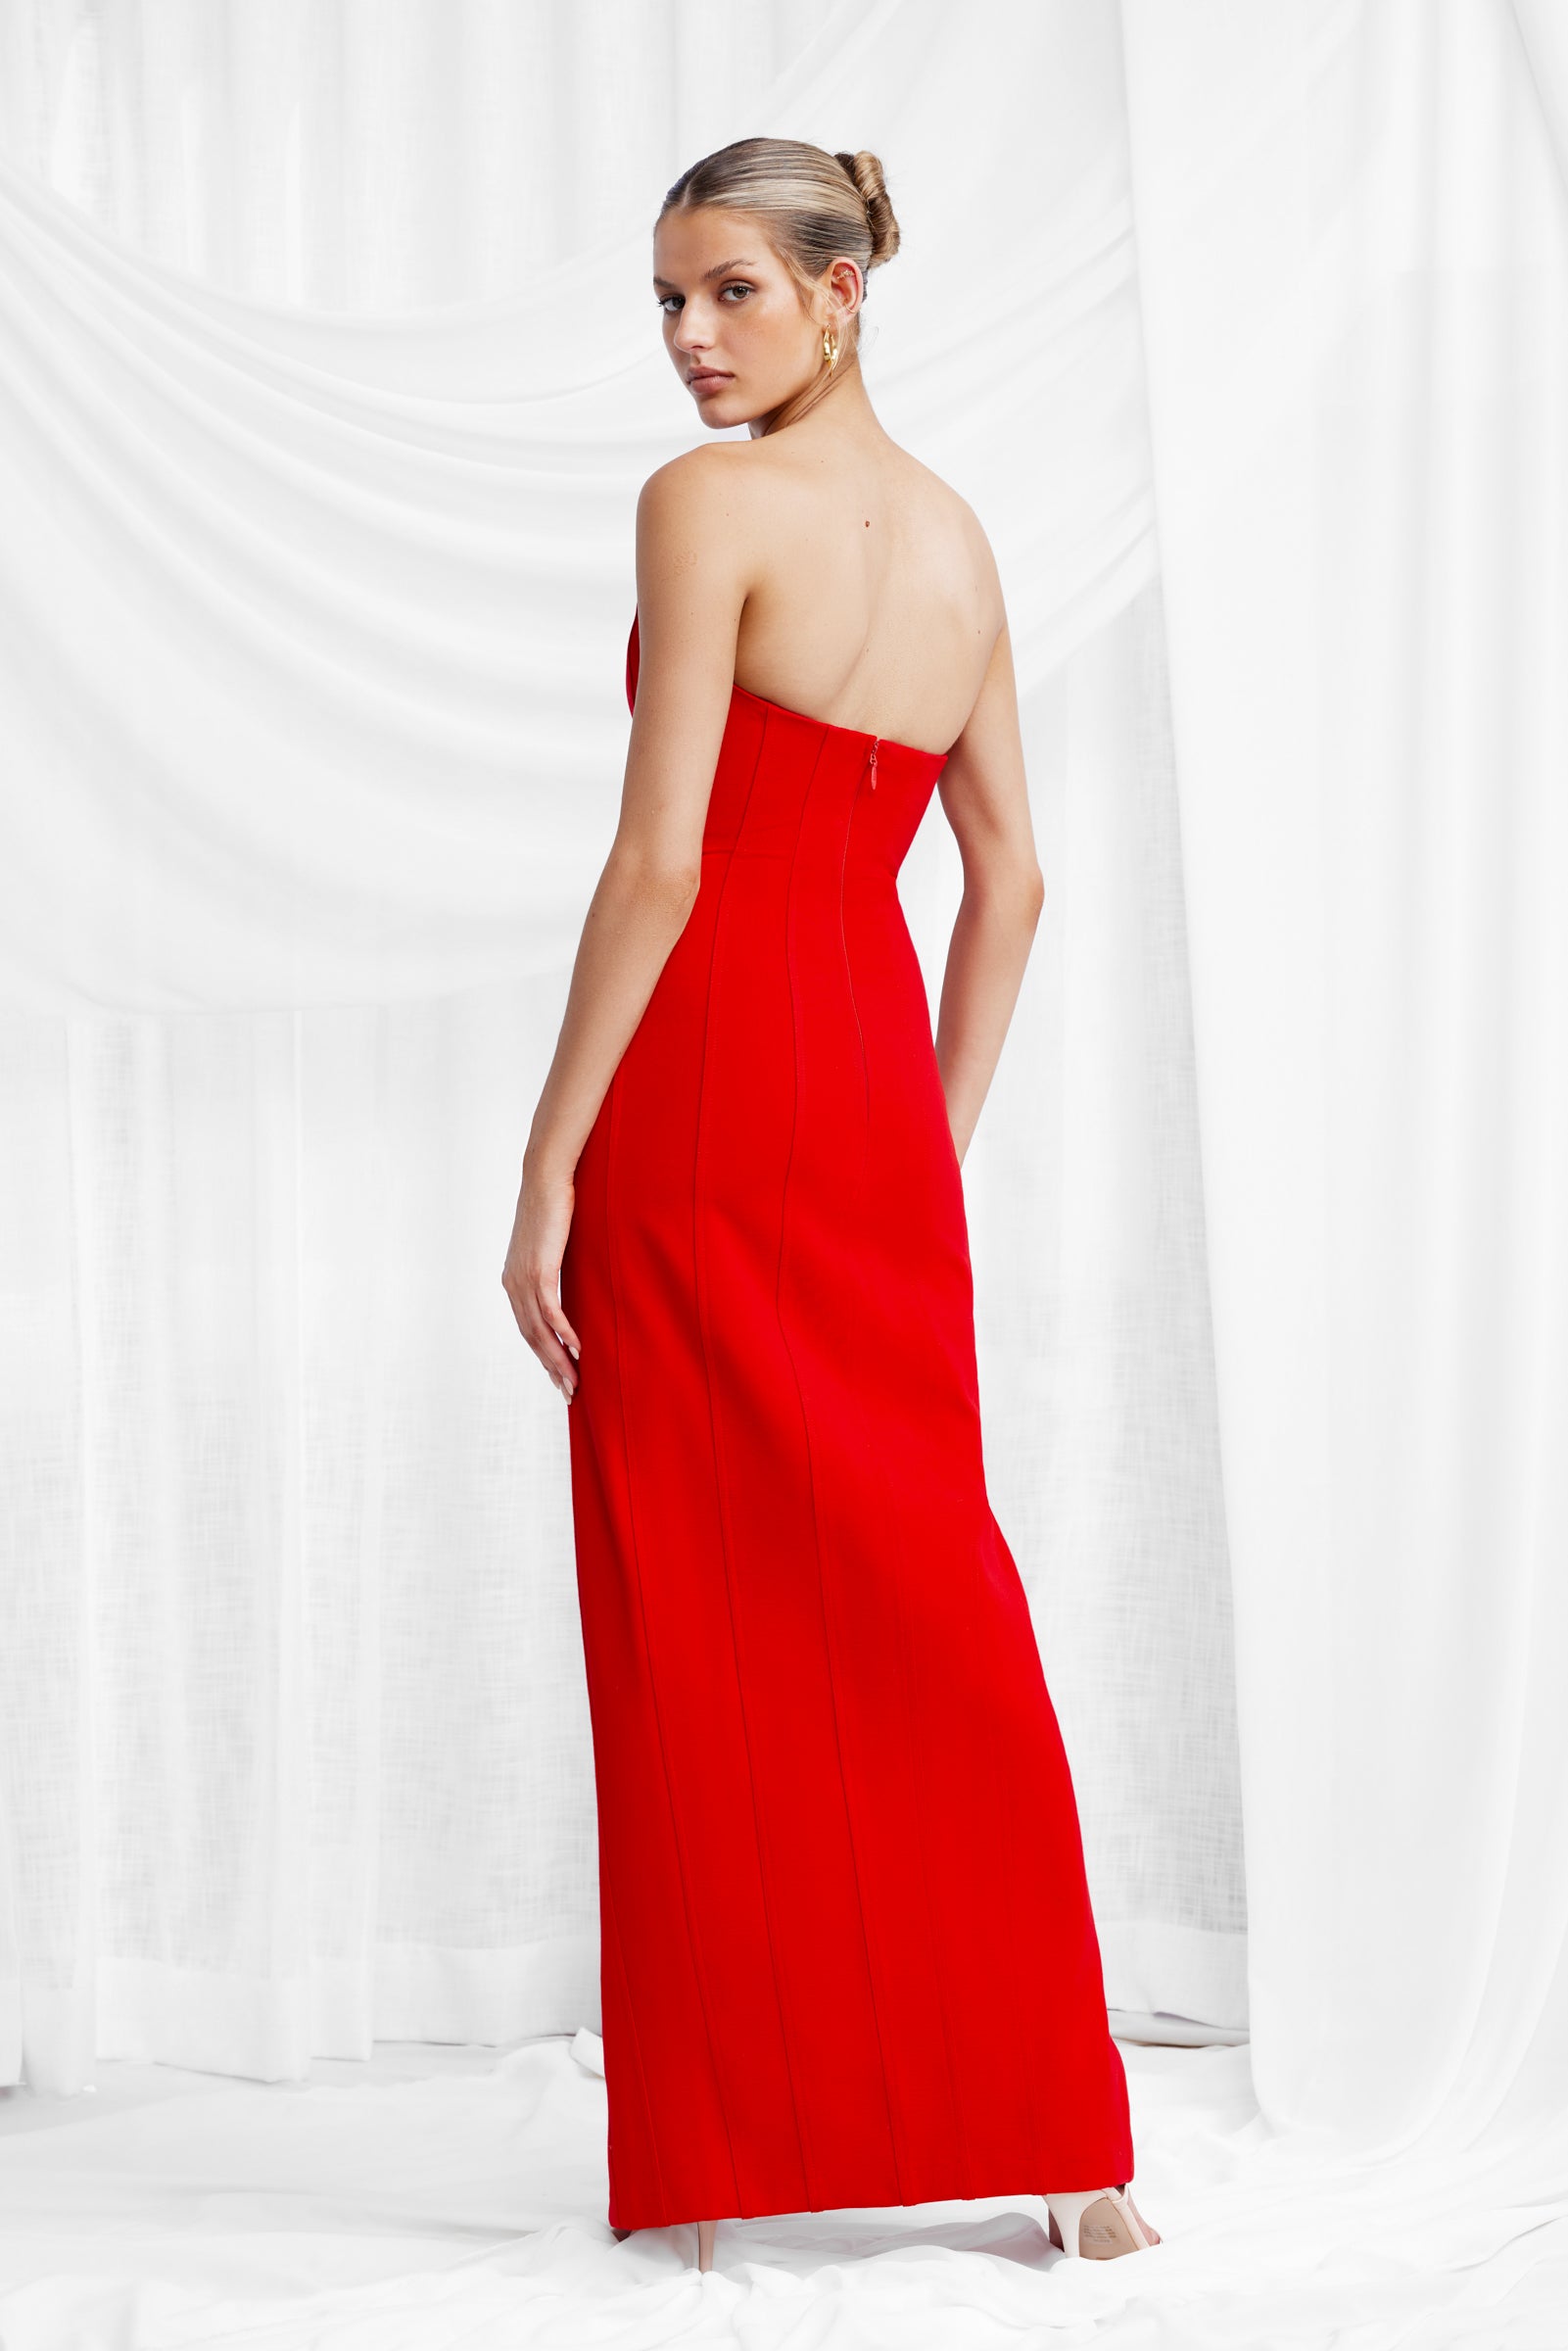 Lexi Clothing Leyla Dress | Lexi Evening Gowns | Lexi Prom Dress